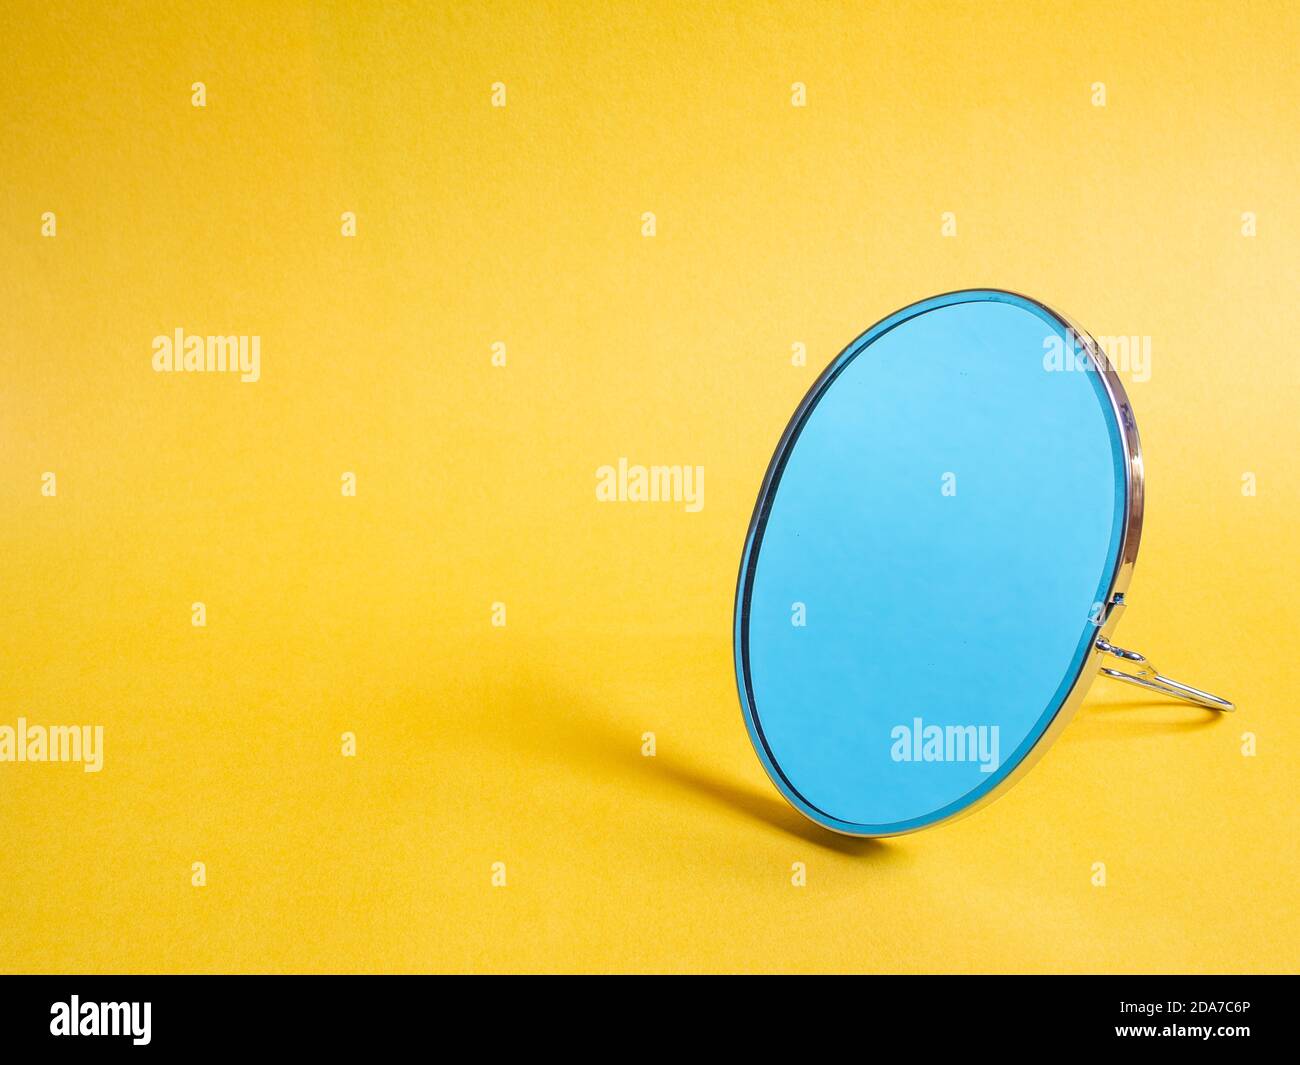 small modern desktop mirror on yellow background Stock Photo